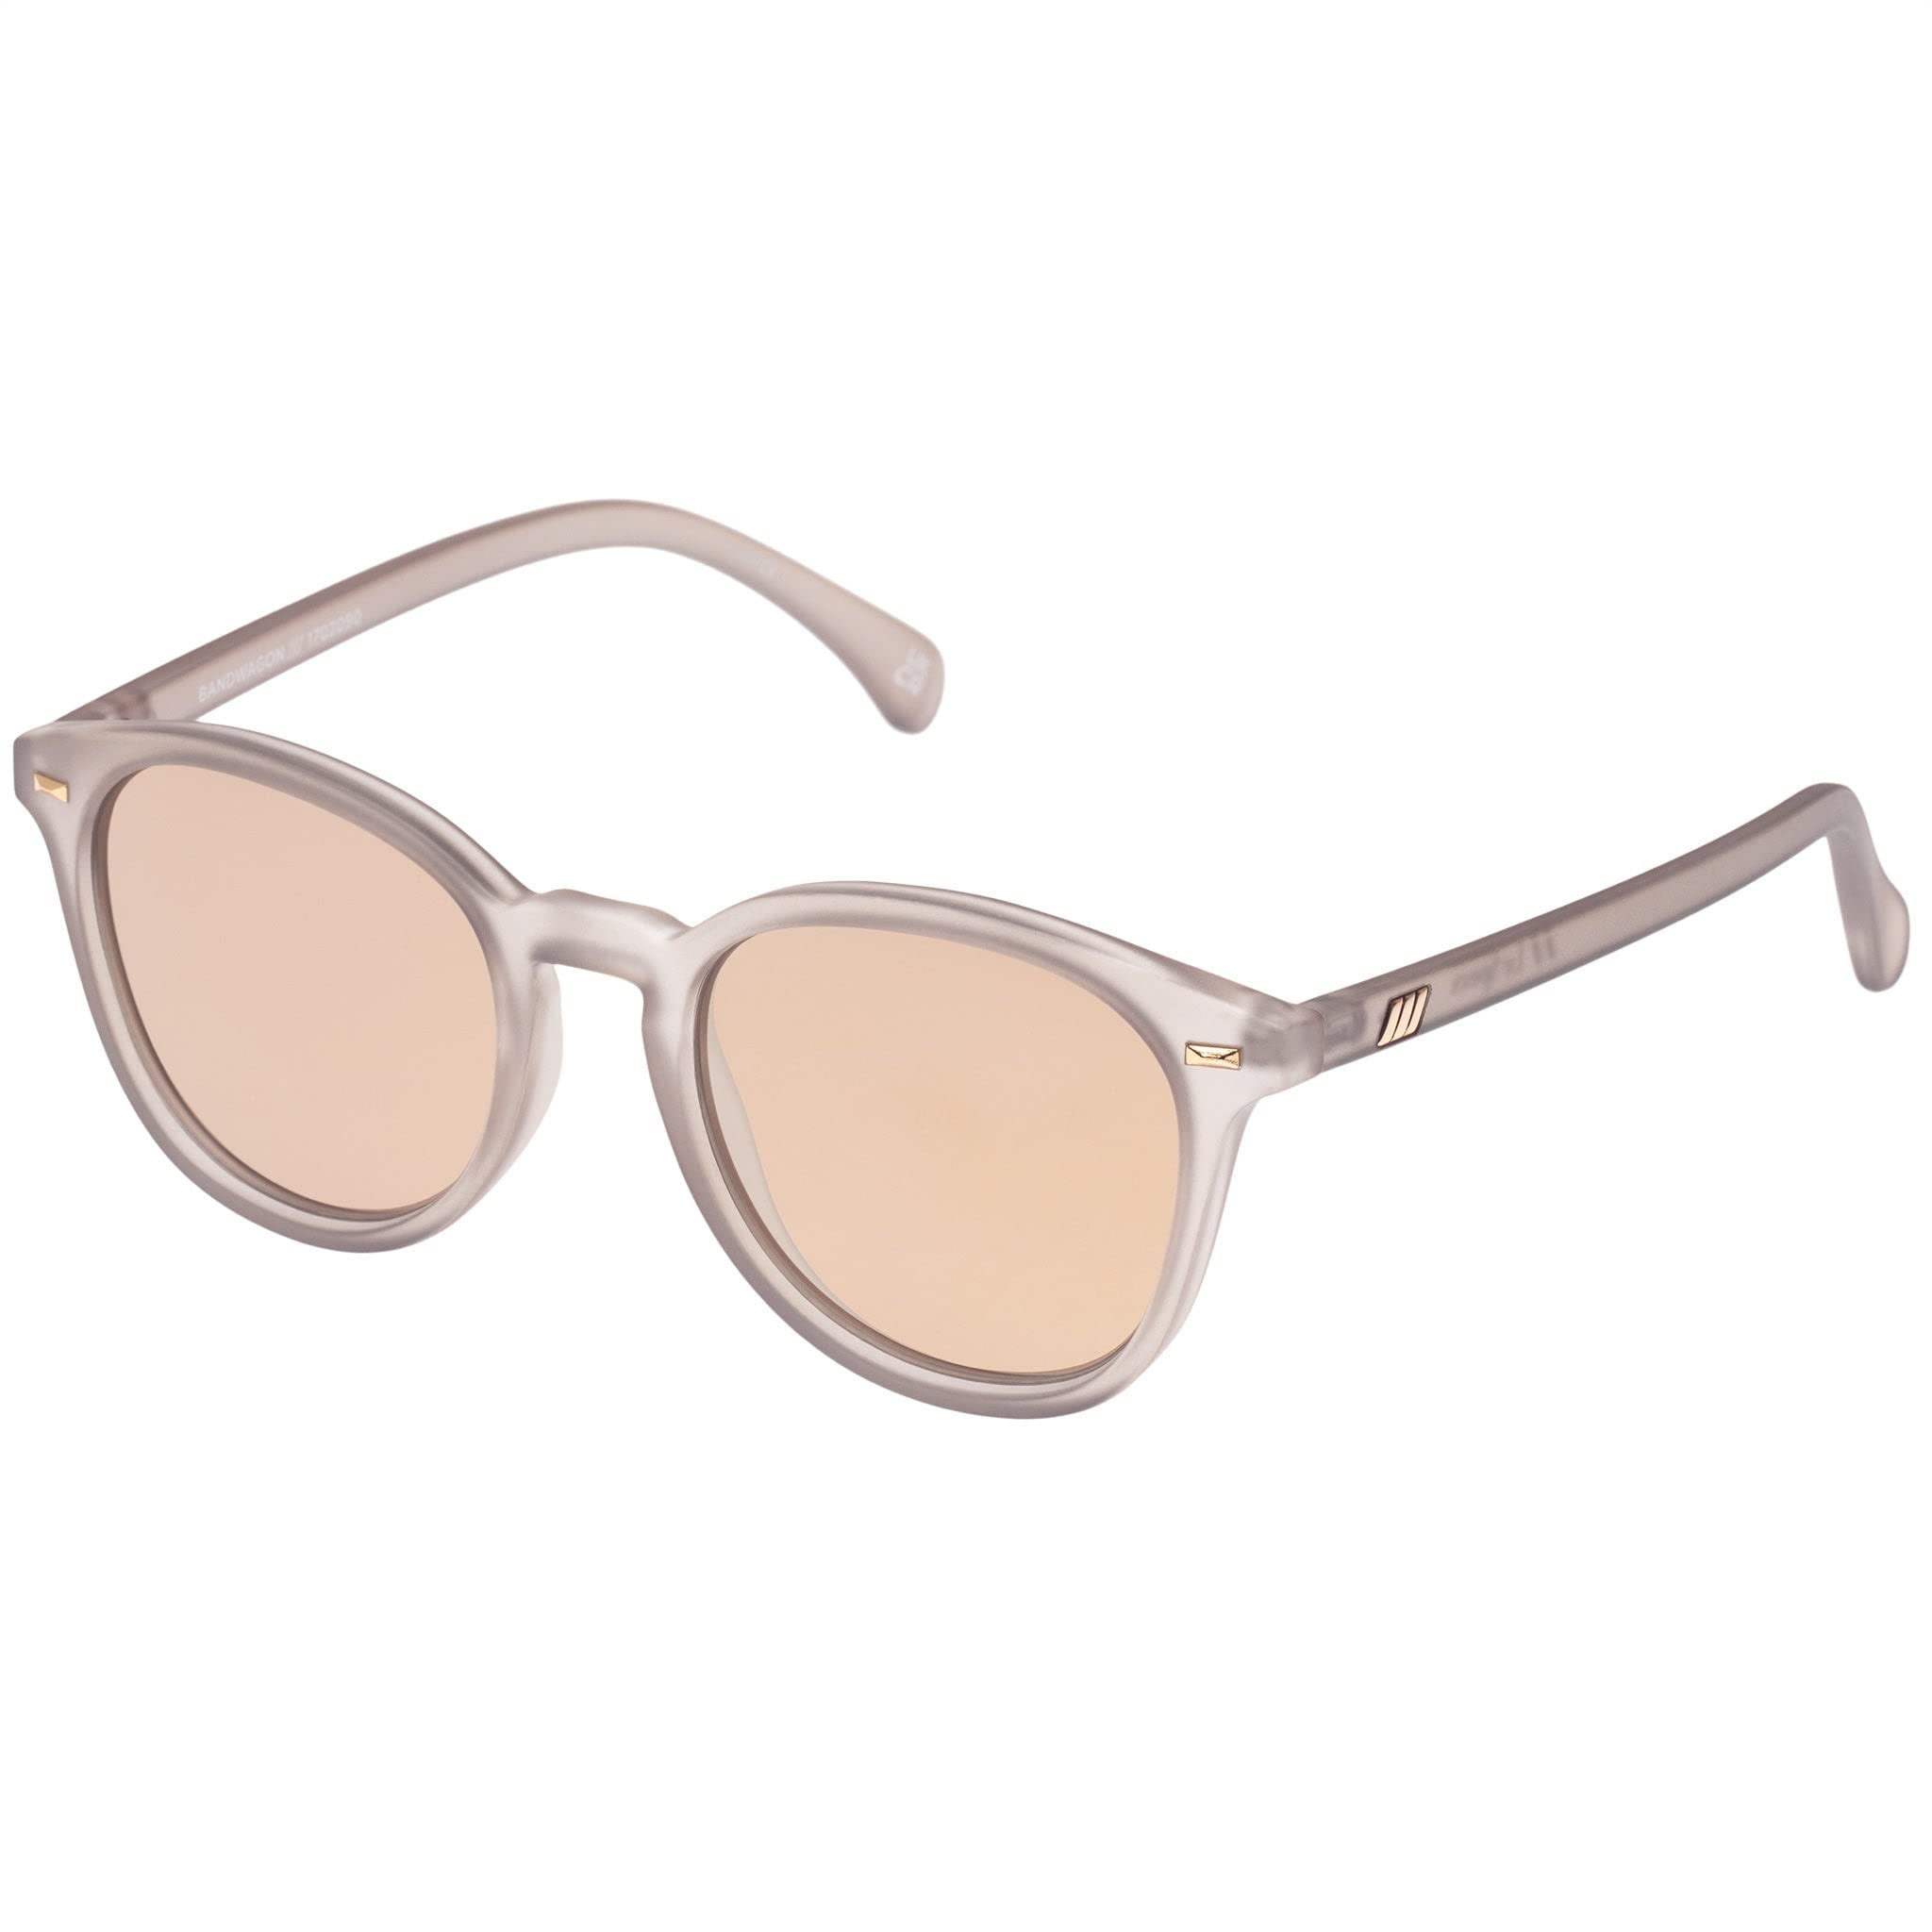 Le Specs 'Bandwagon' Sunglasses in Black Tor - Meghan's Mirror